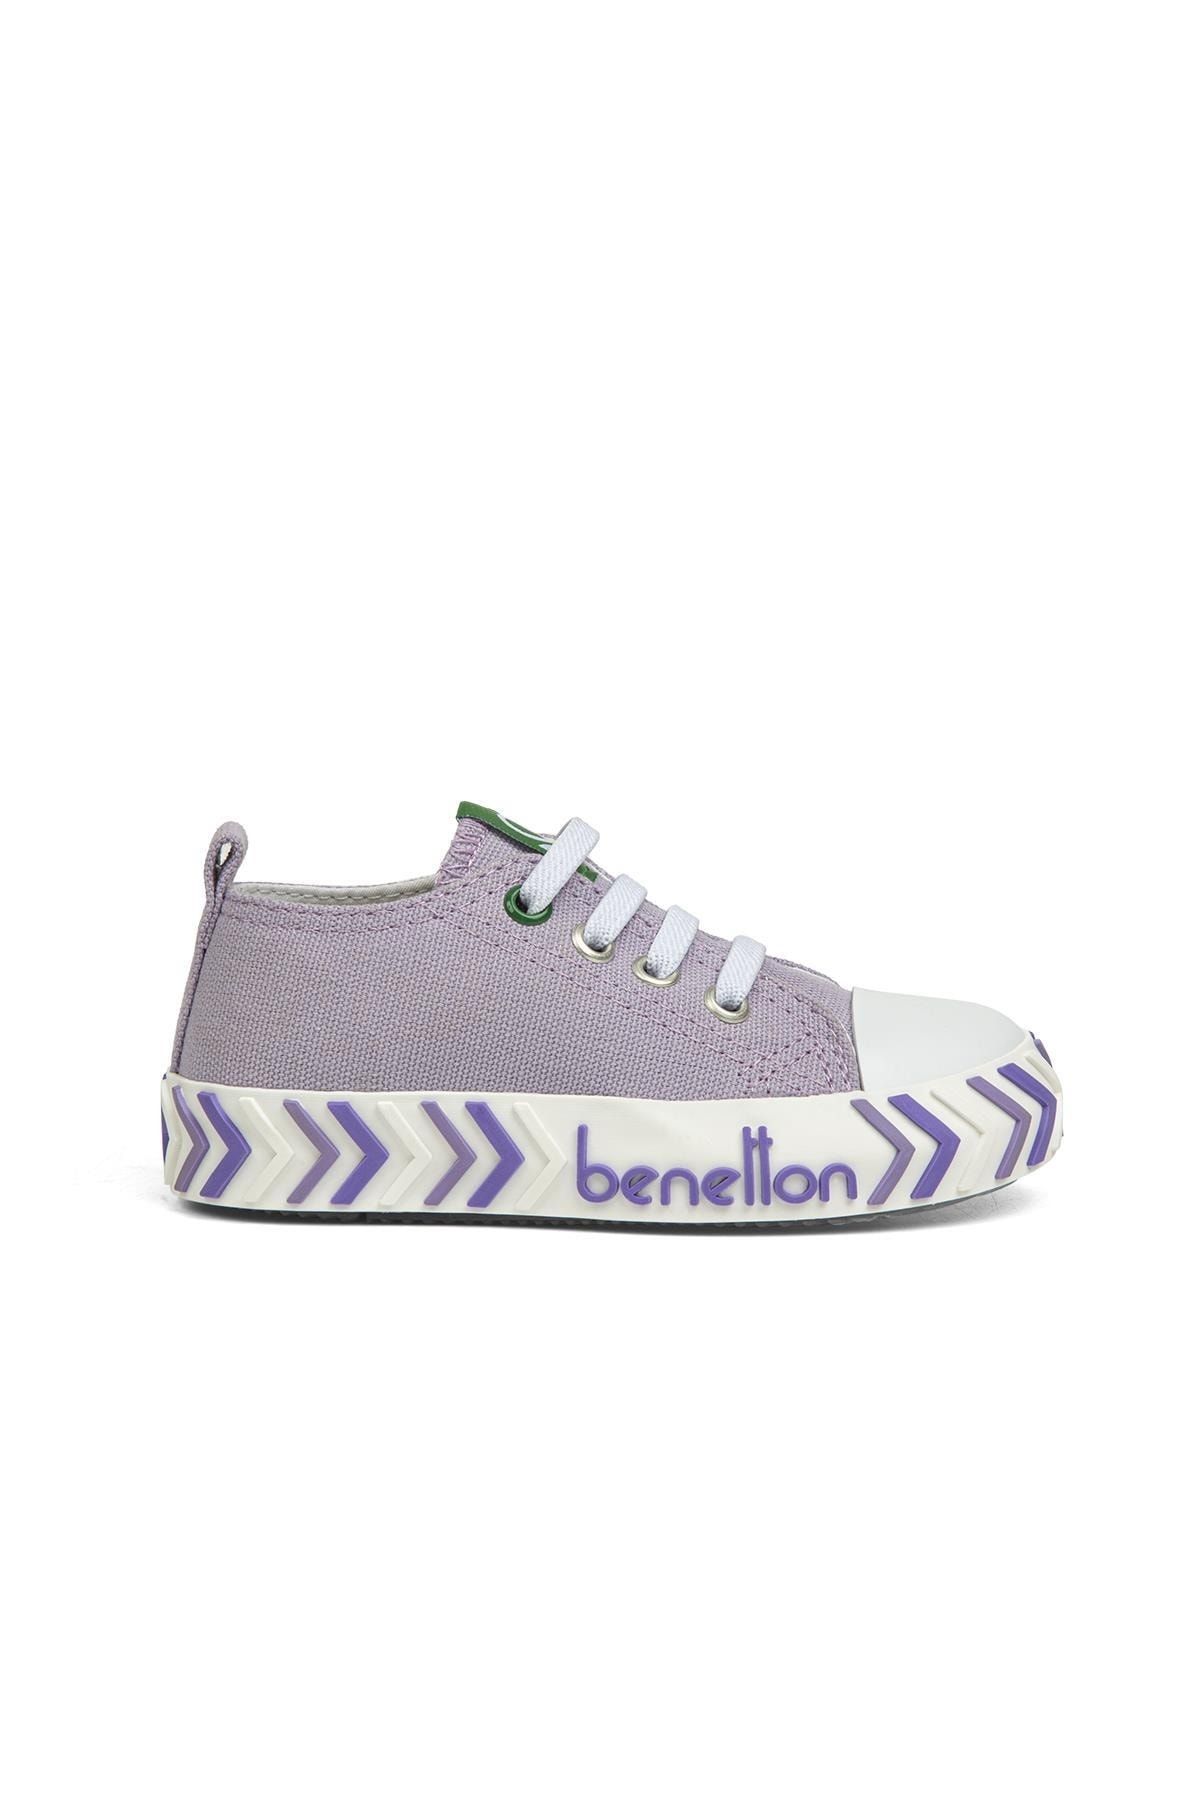 Benetton ® | Bn-30640 - 3394 Lila - Çocuk Sneakers